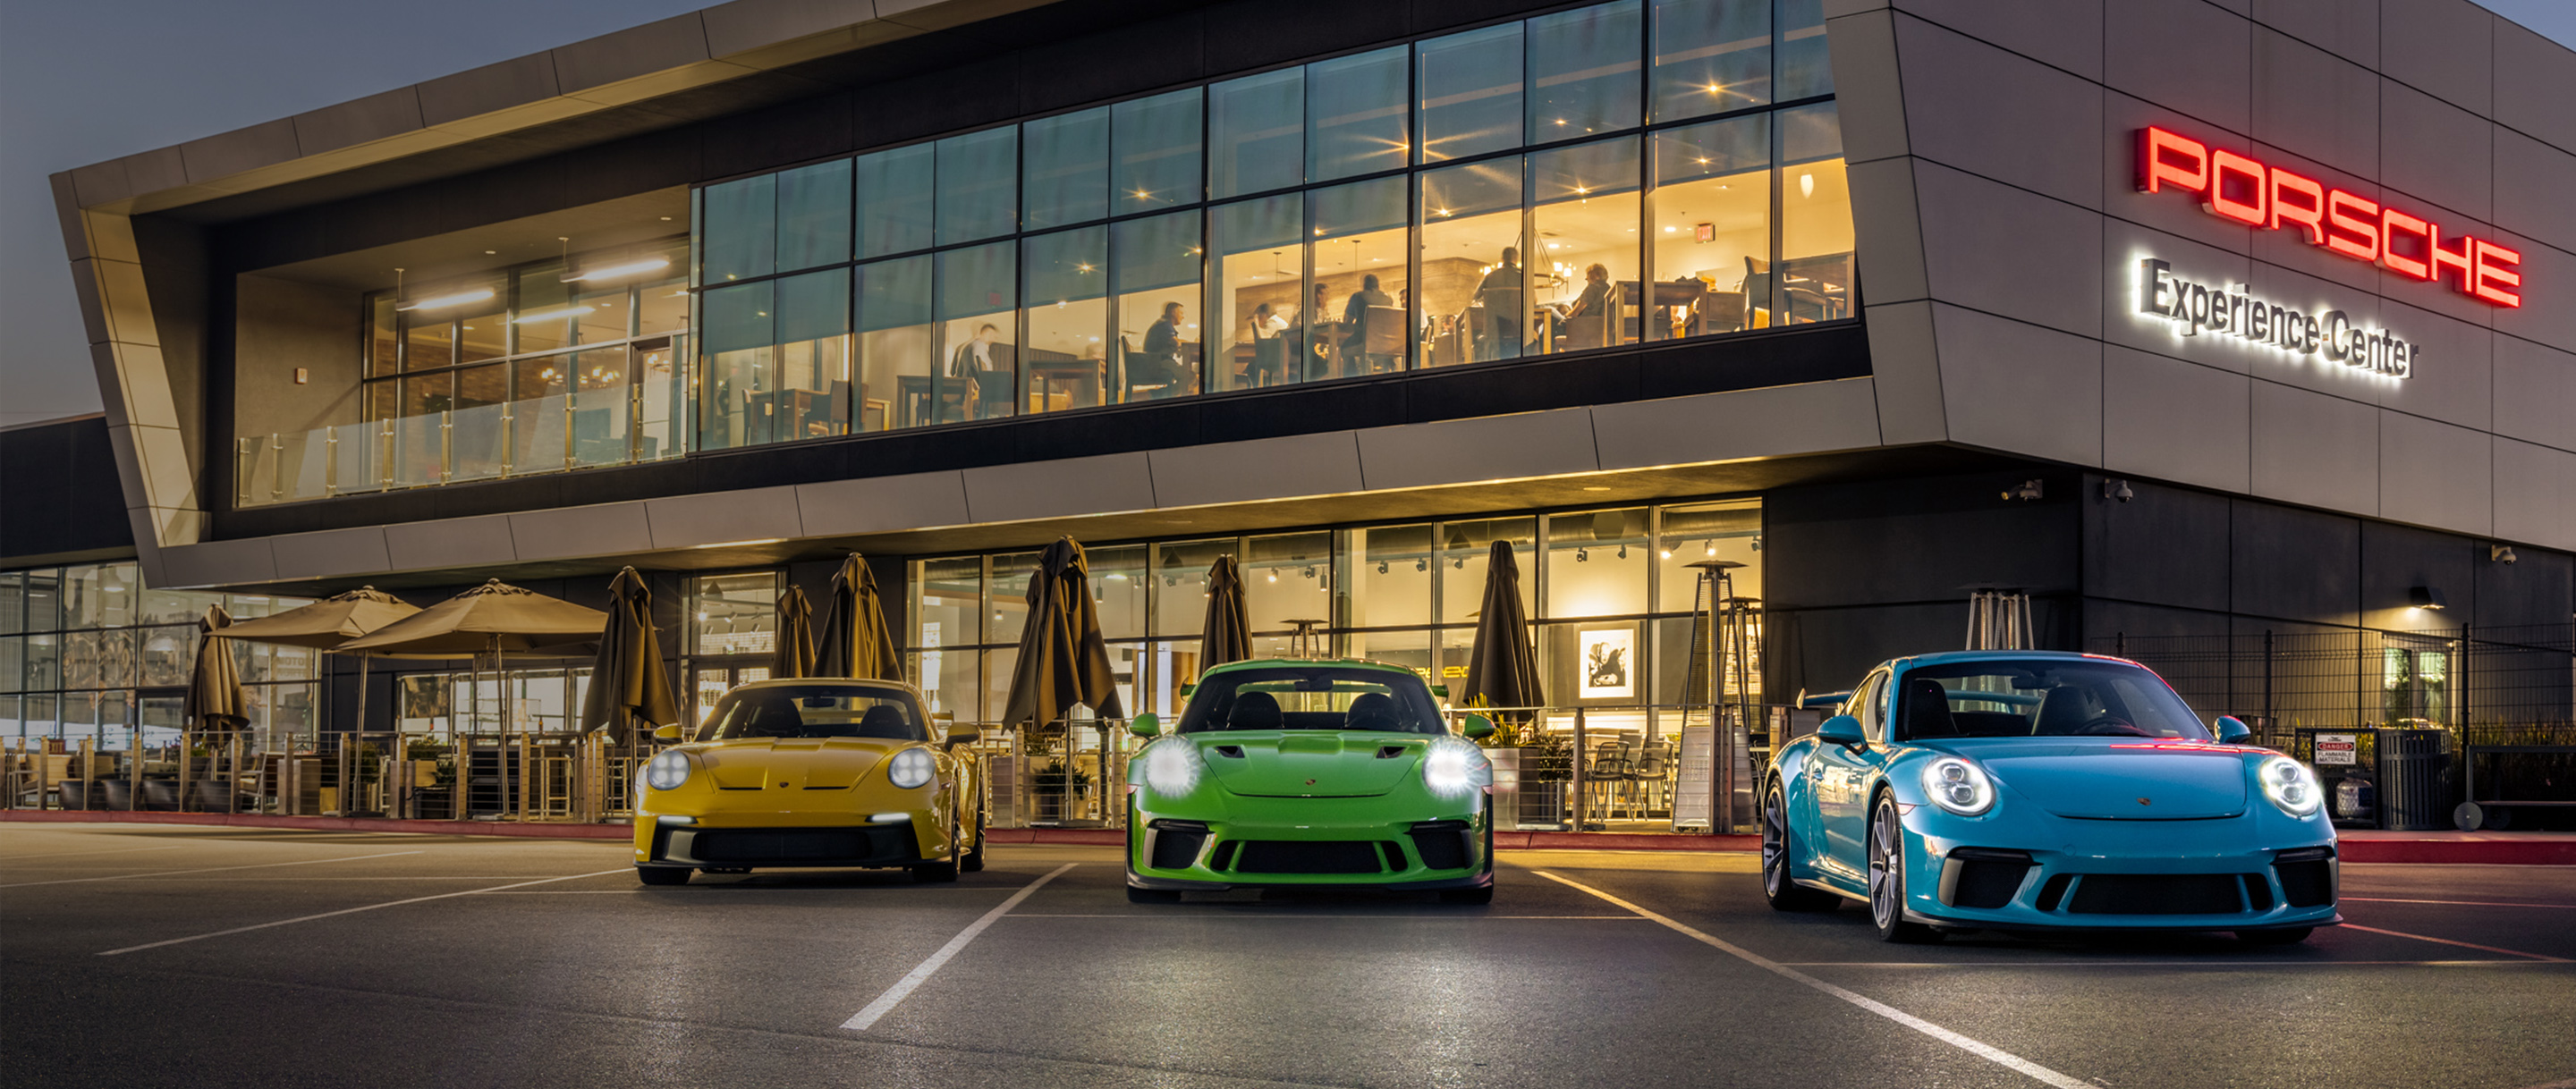 Porsche Experience Center Los Angeles Facilities and Venue Header mobile